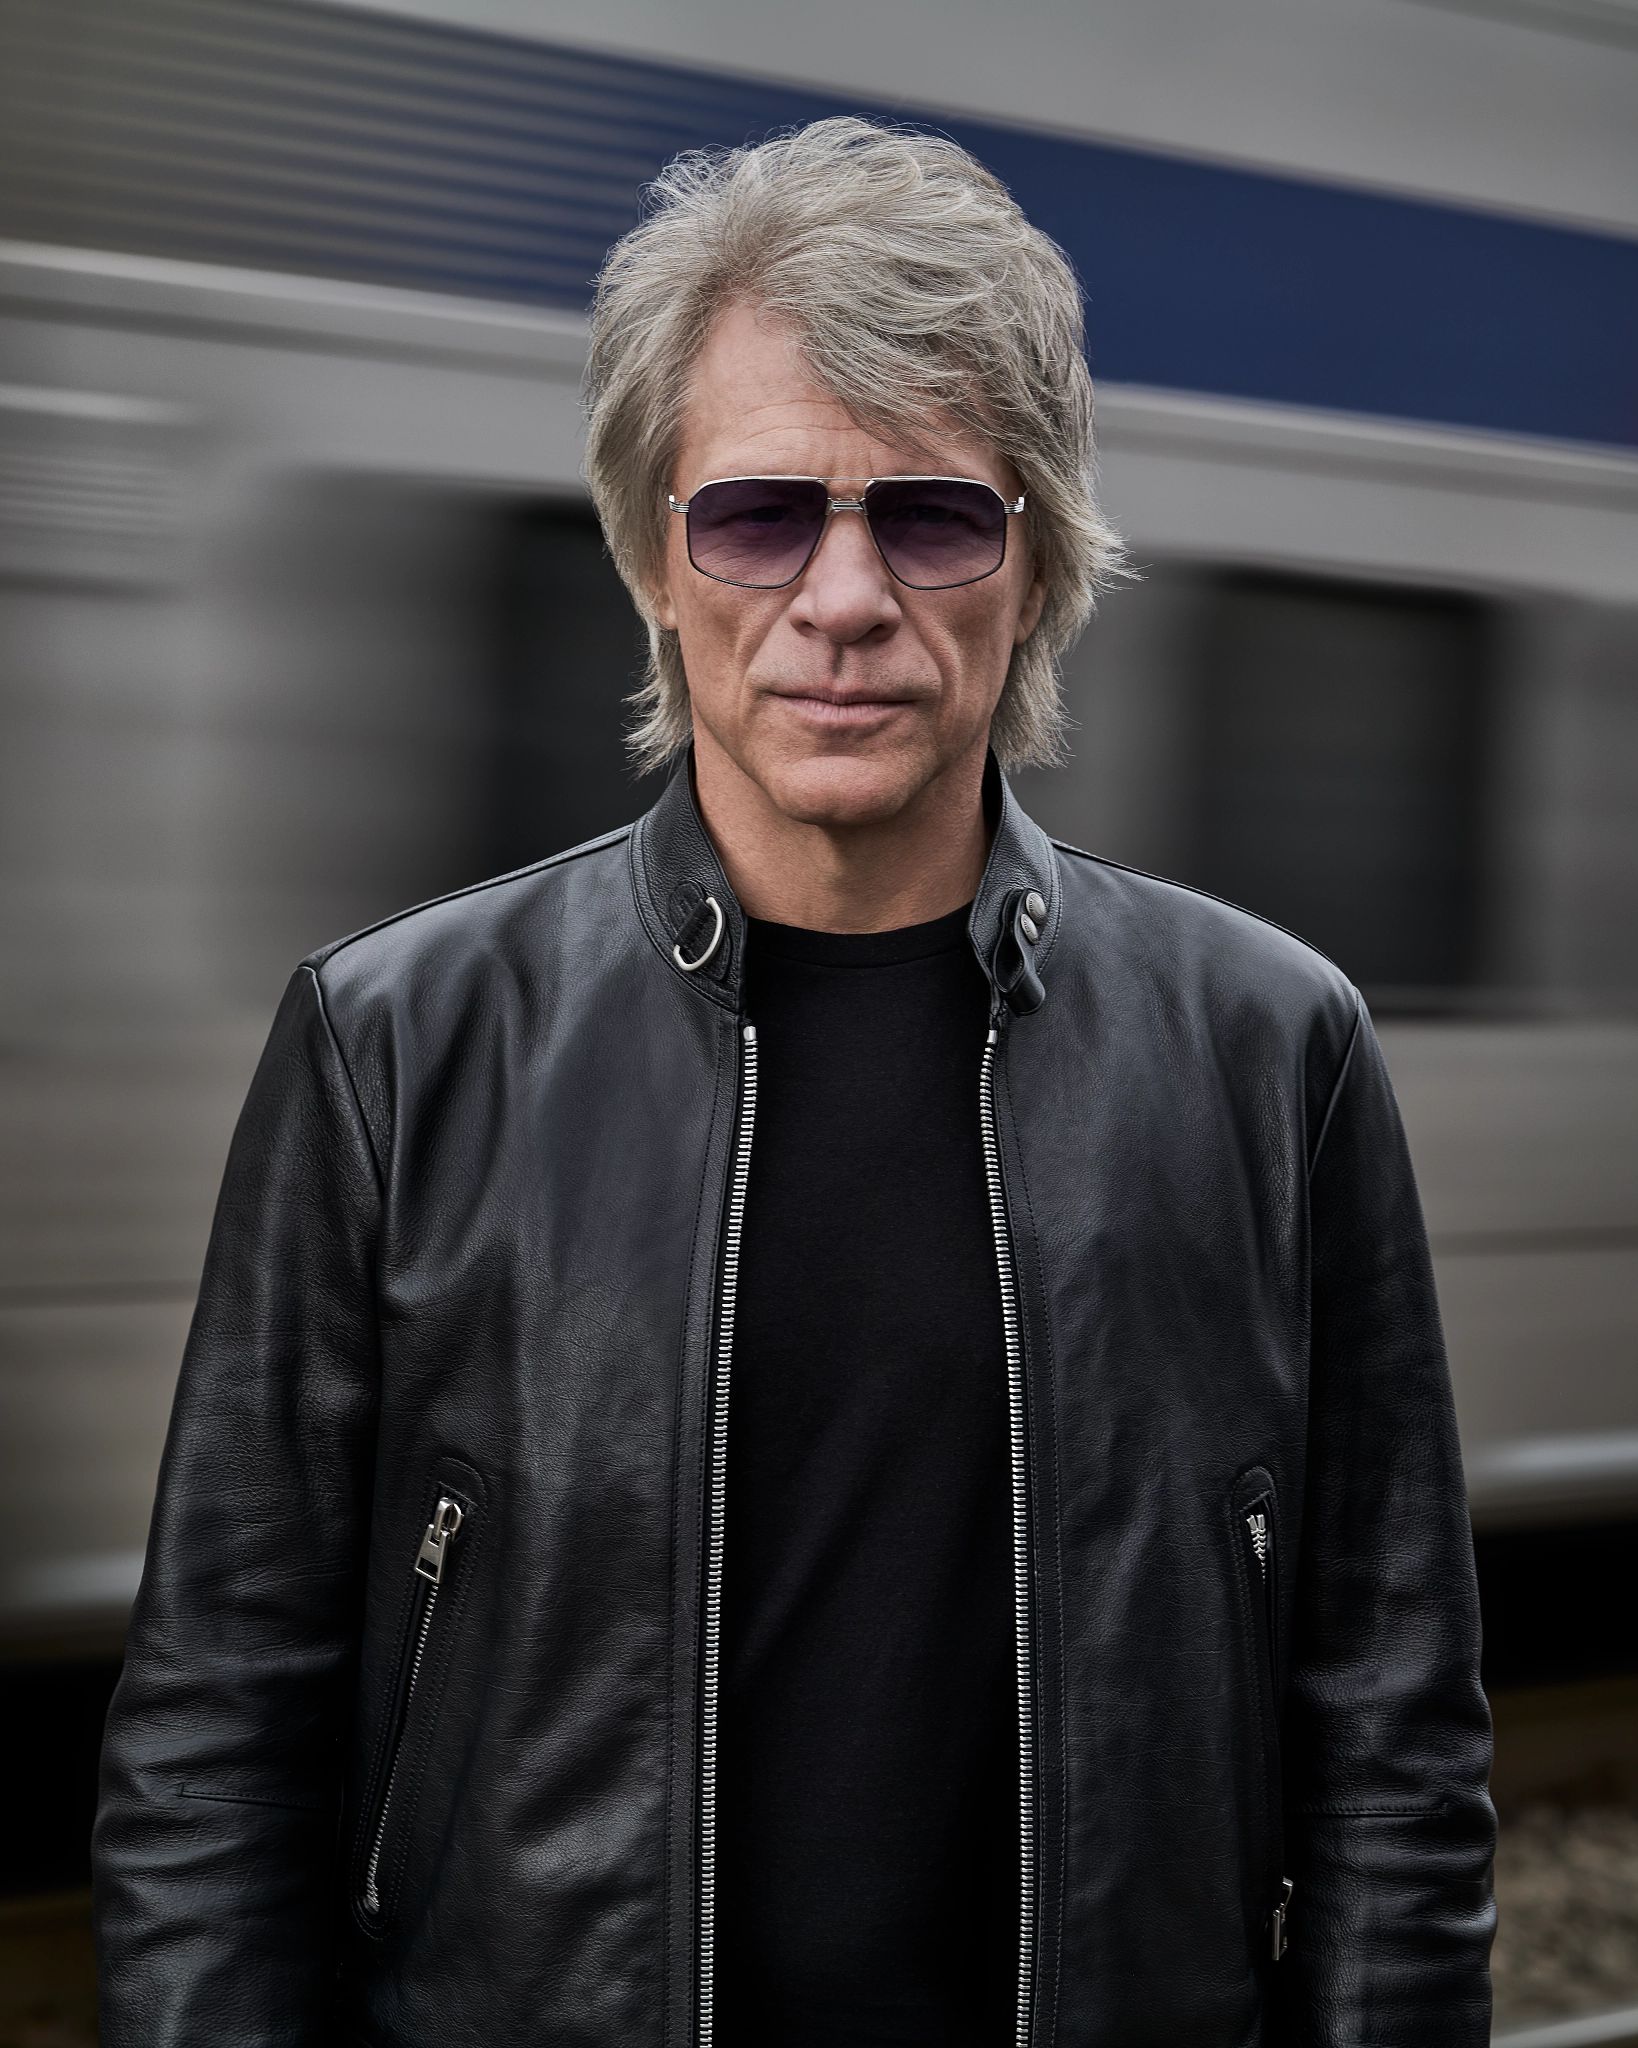 Jon Bon Jovi wearing sunglasses with a vehicle passing behind him